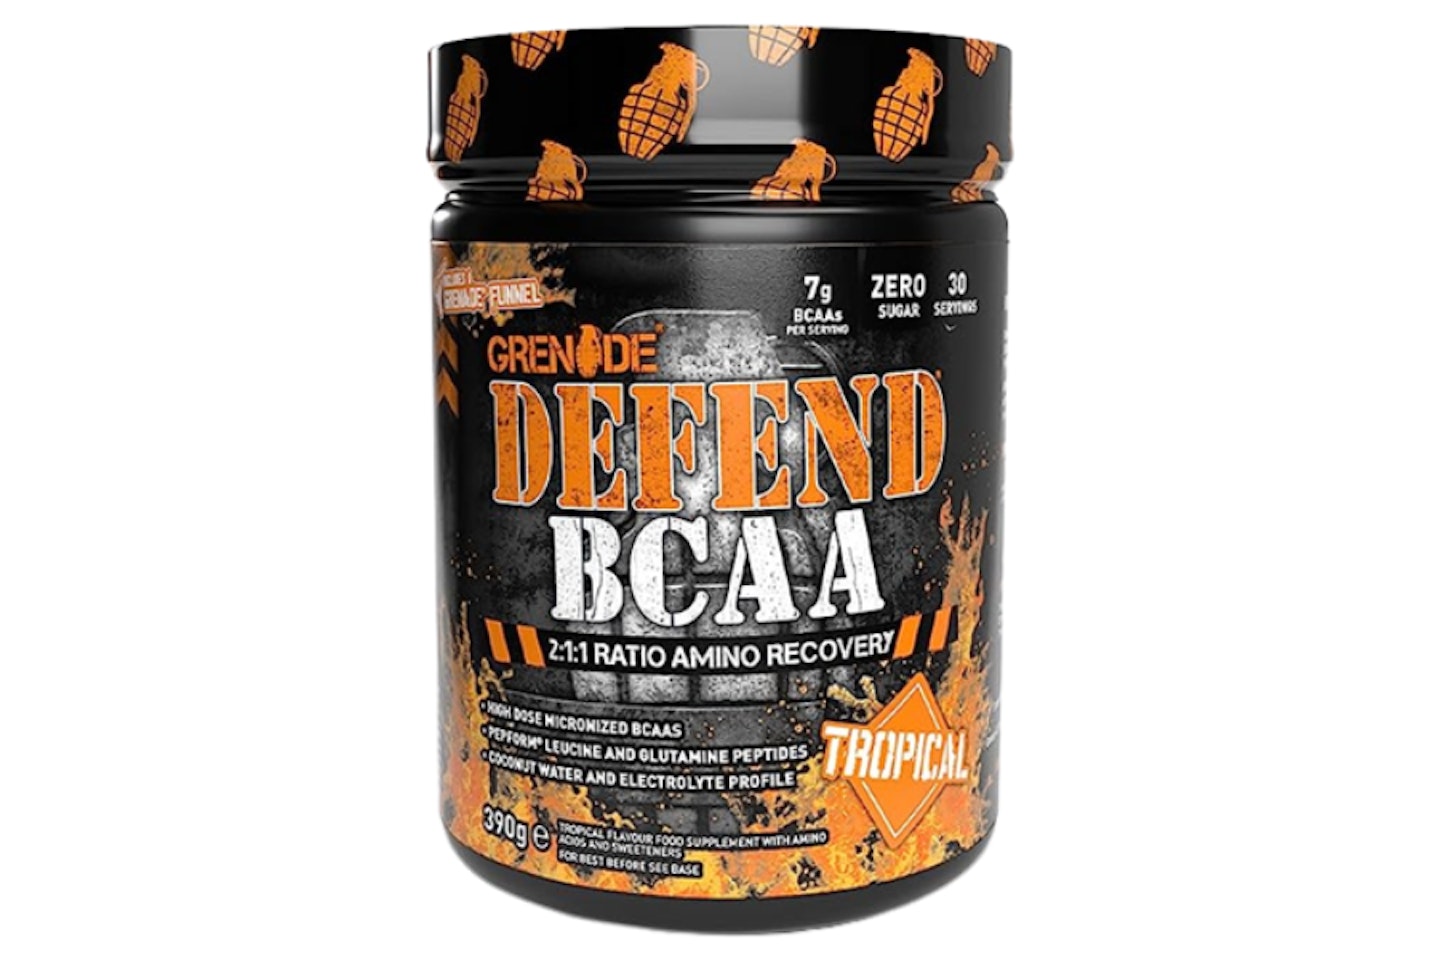 Grenade Defend BCAA Powder, Tropical, 390 g